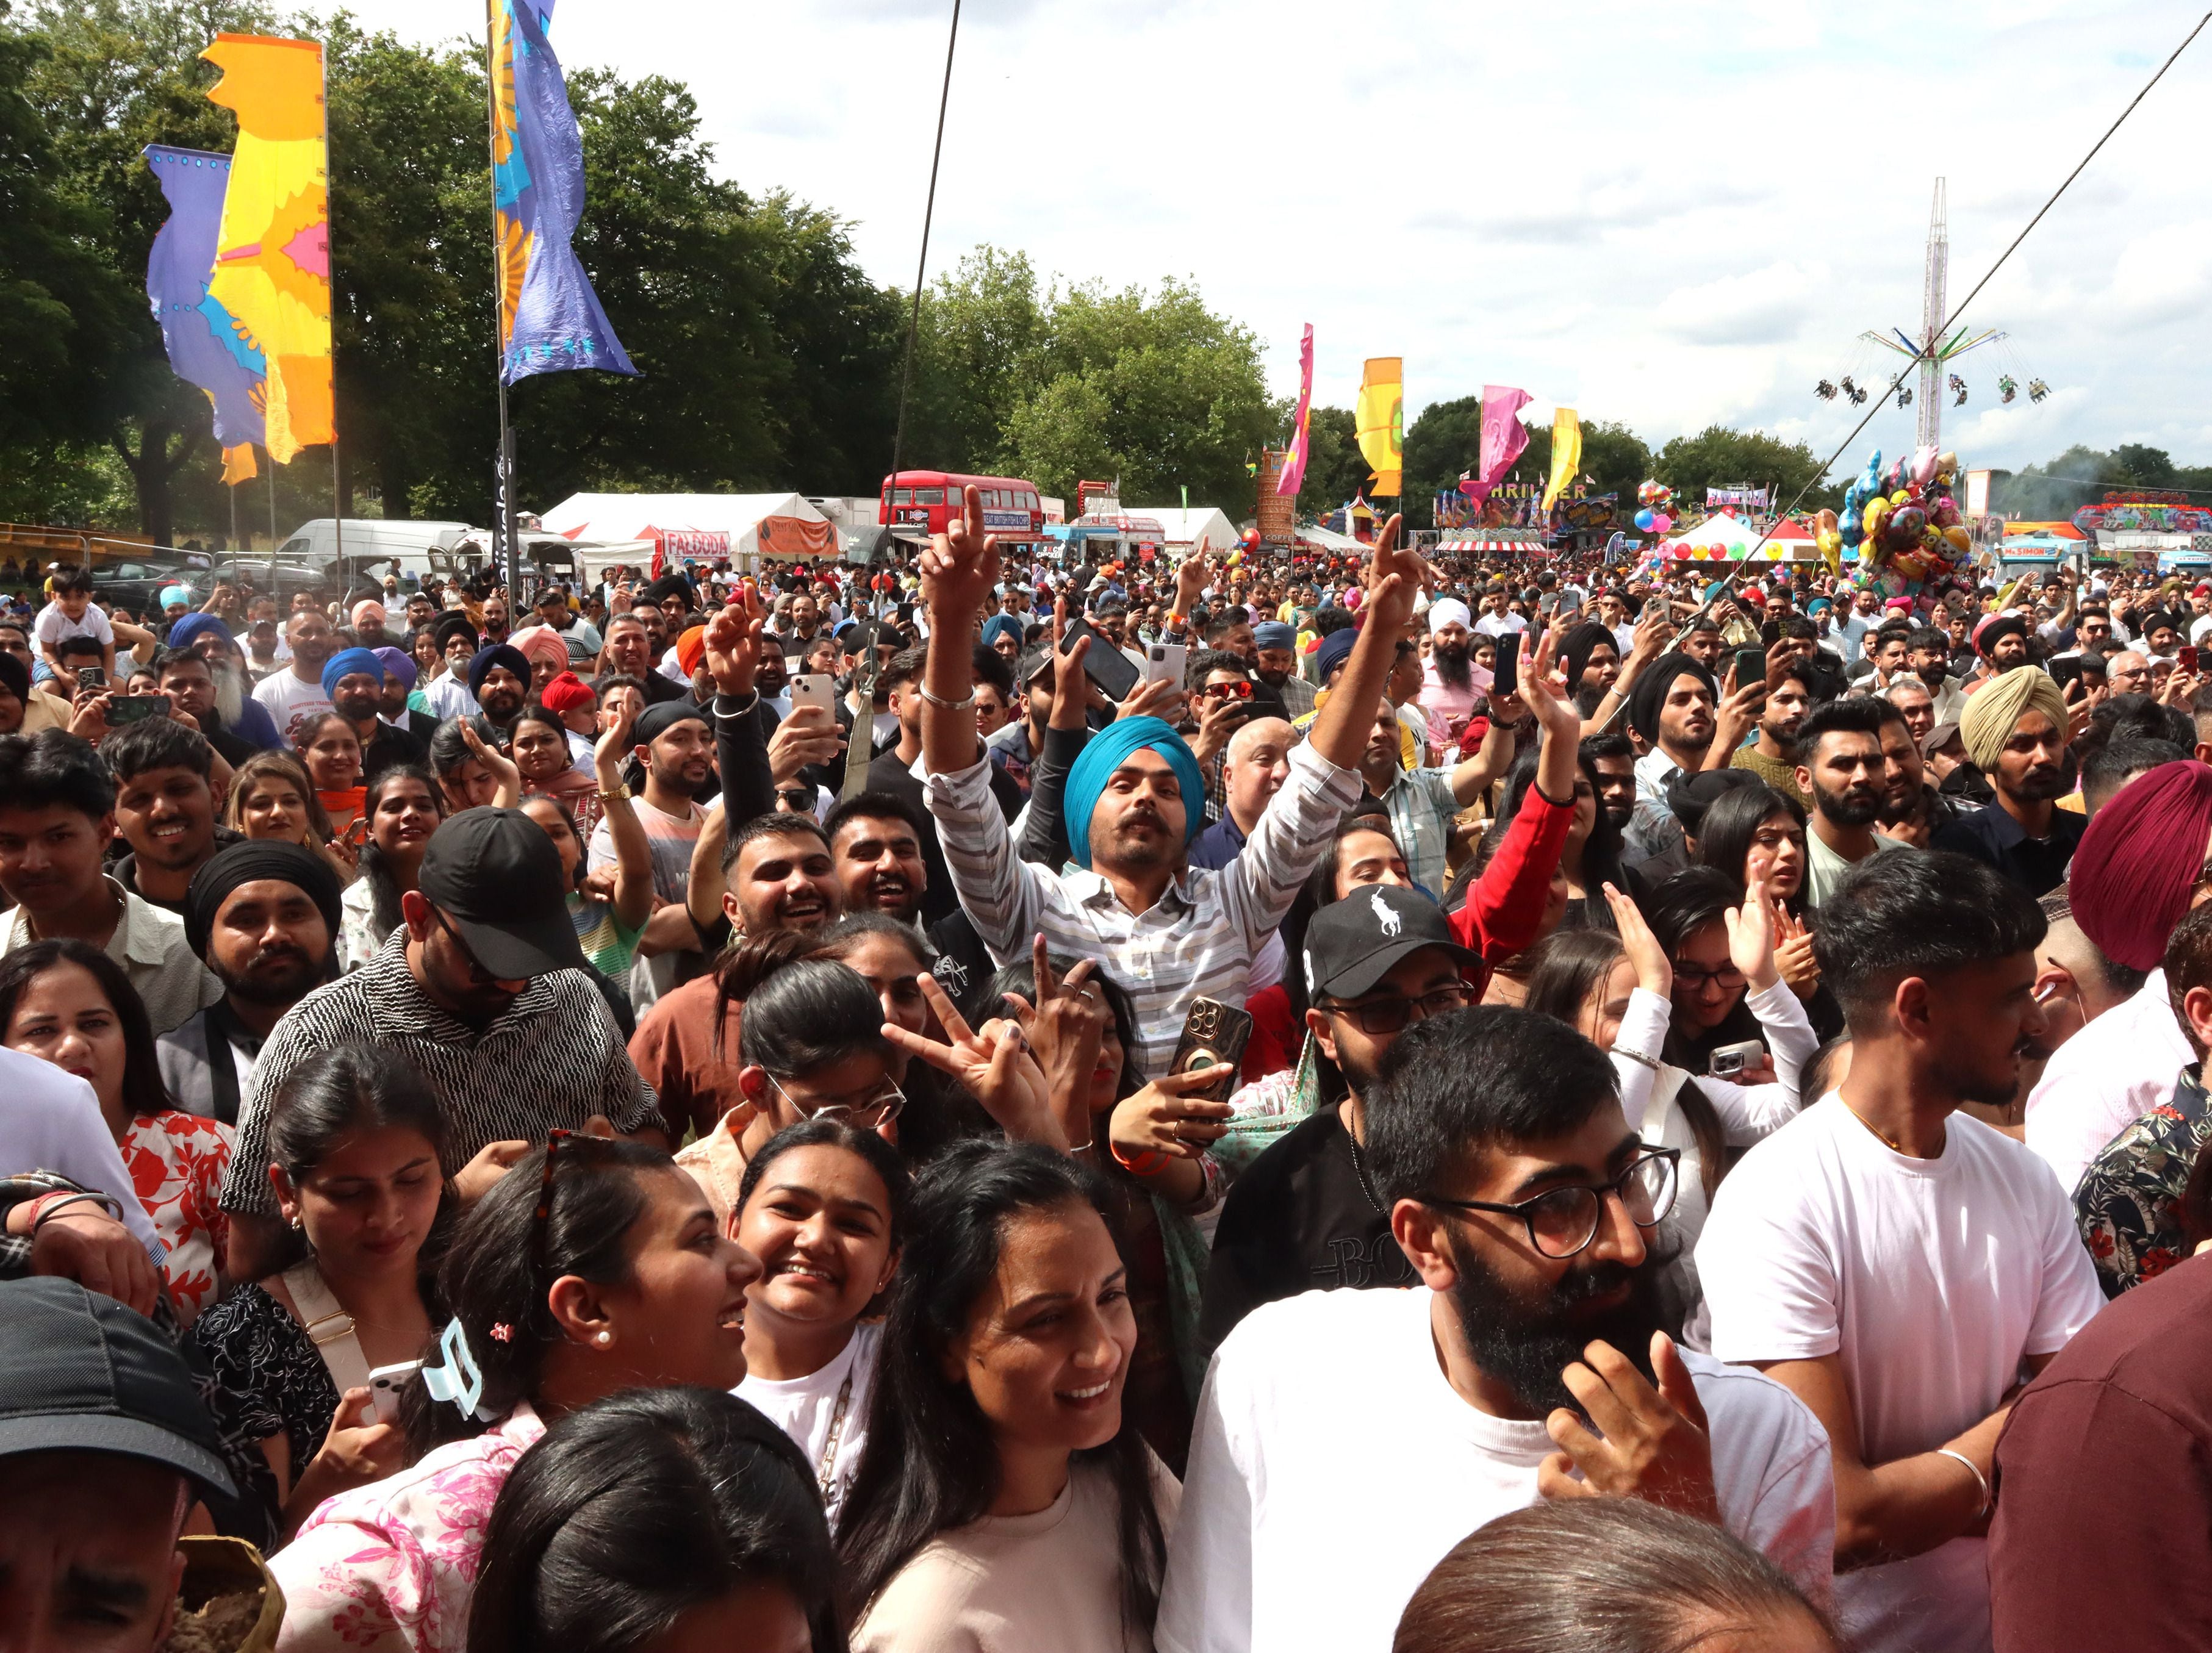 24 joyous photos as thousands turn out for 'fantastic' Mela event